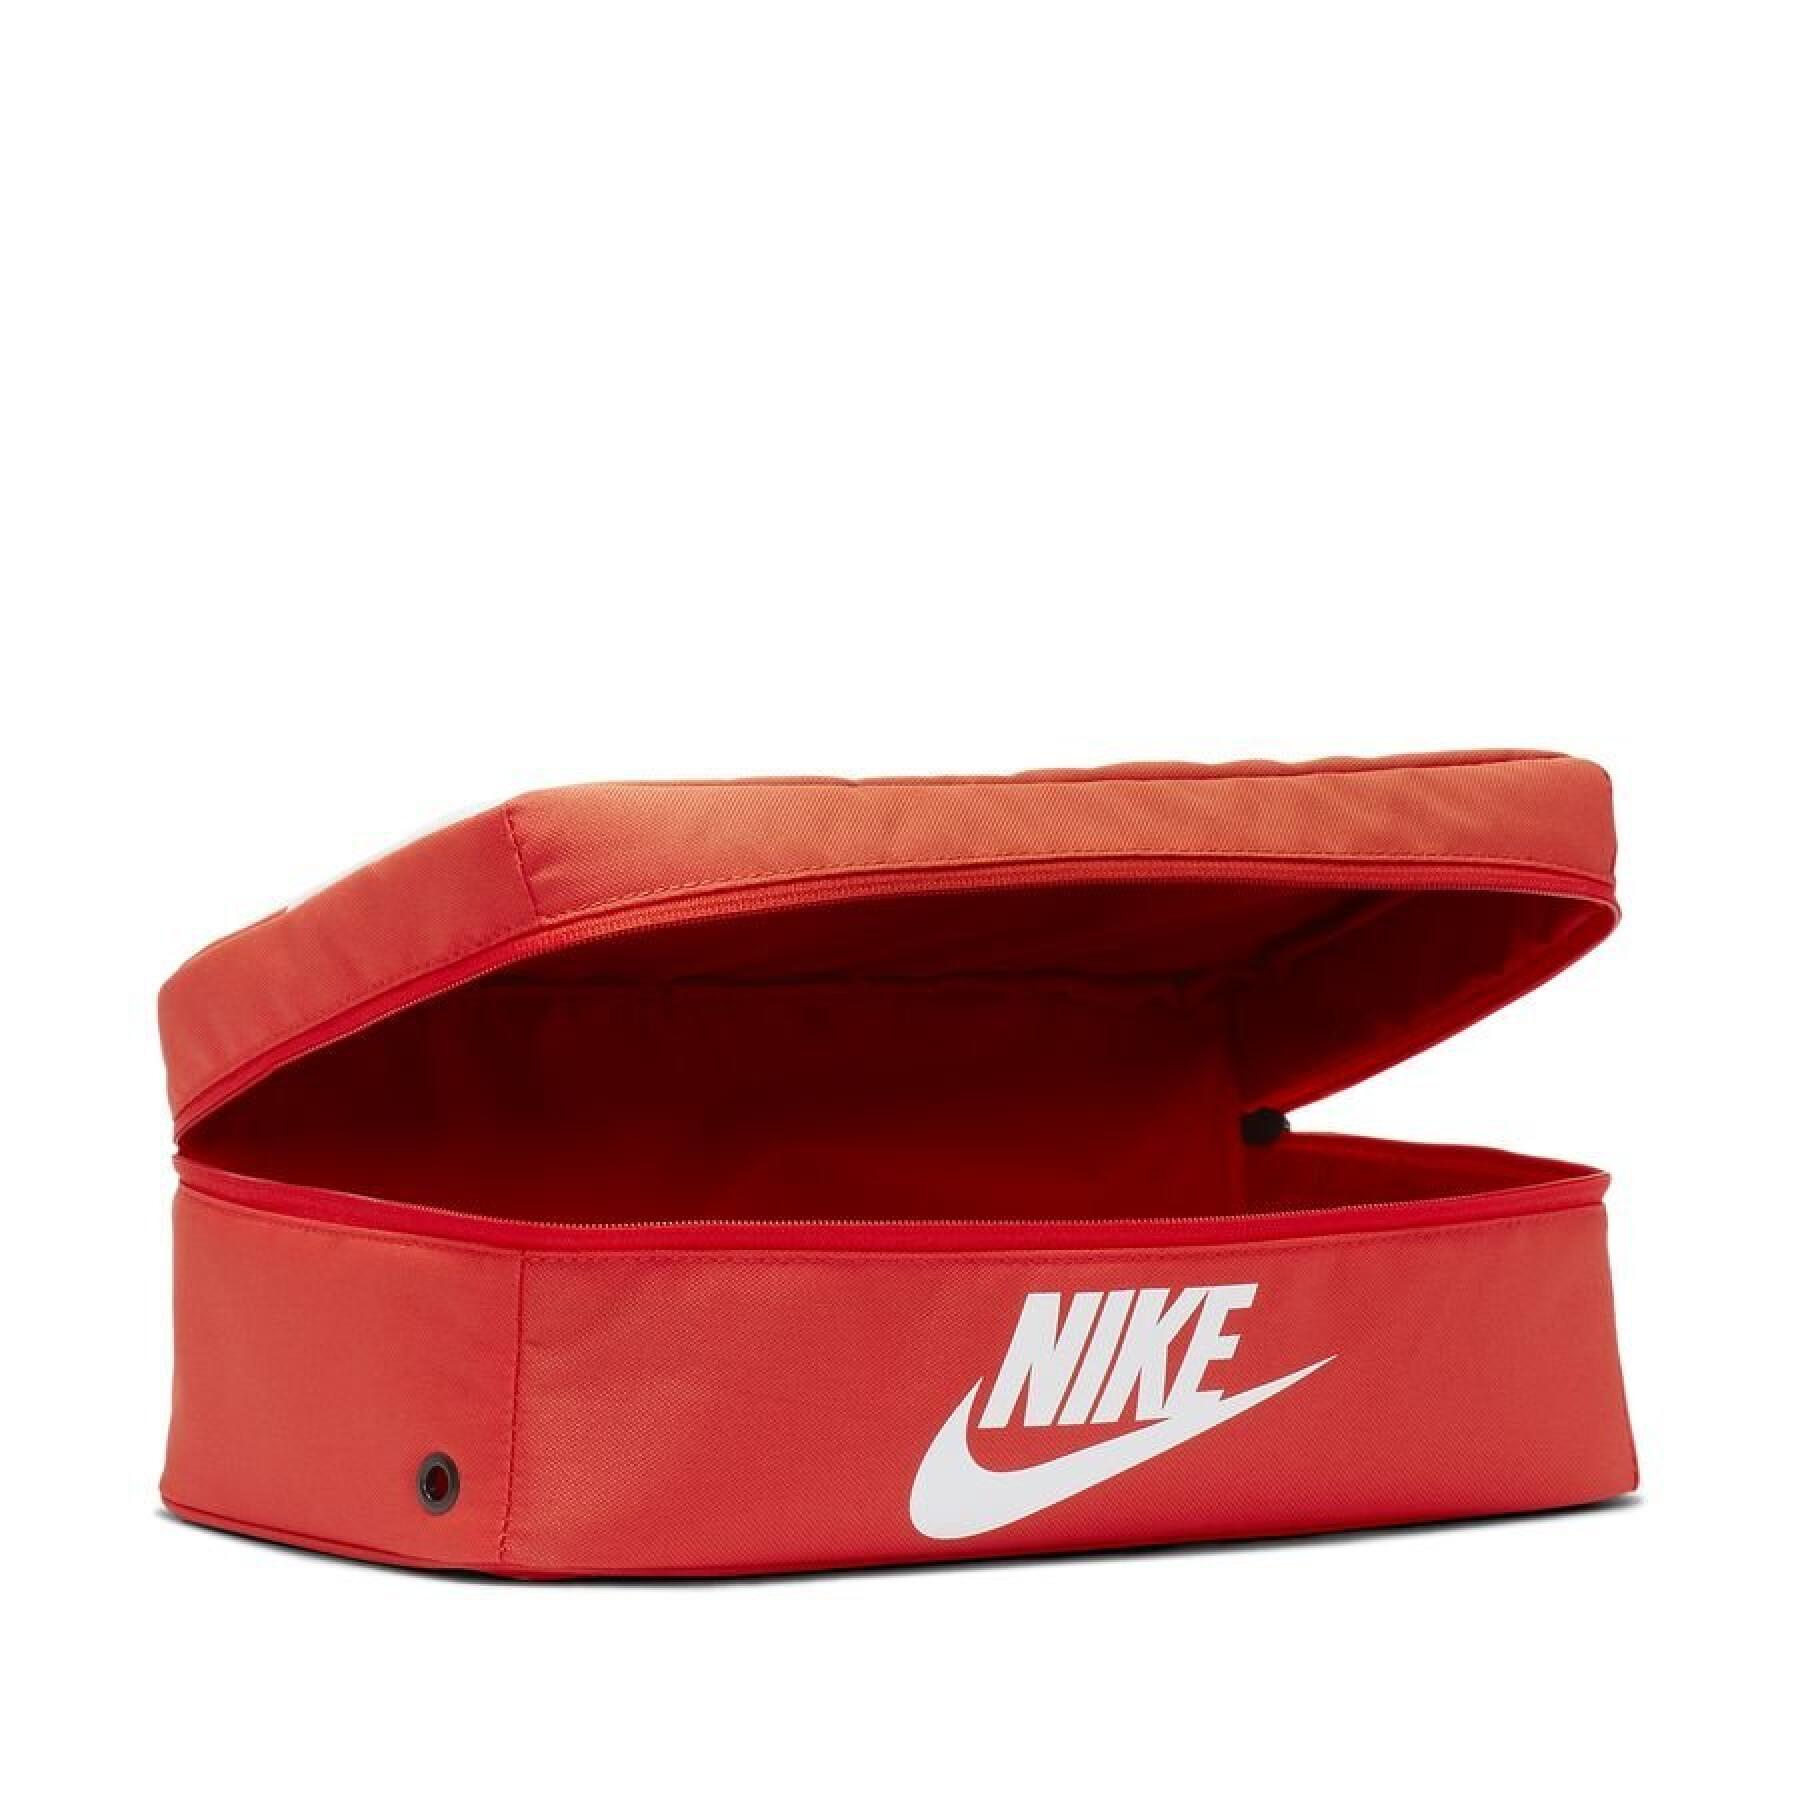 Schuhbeutel zip Nike